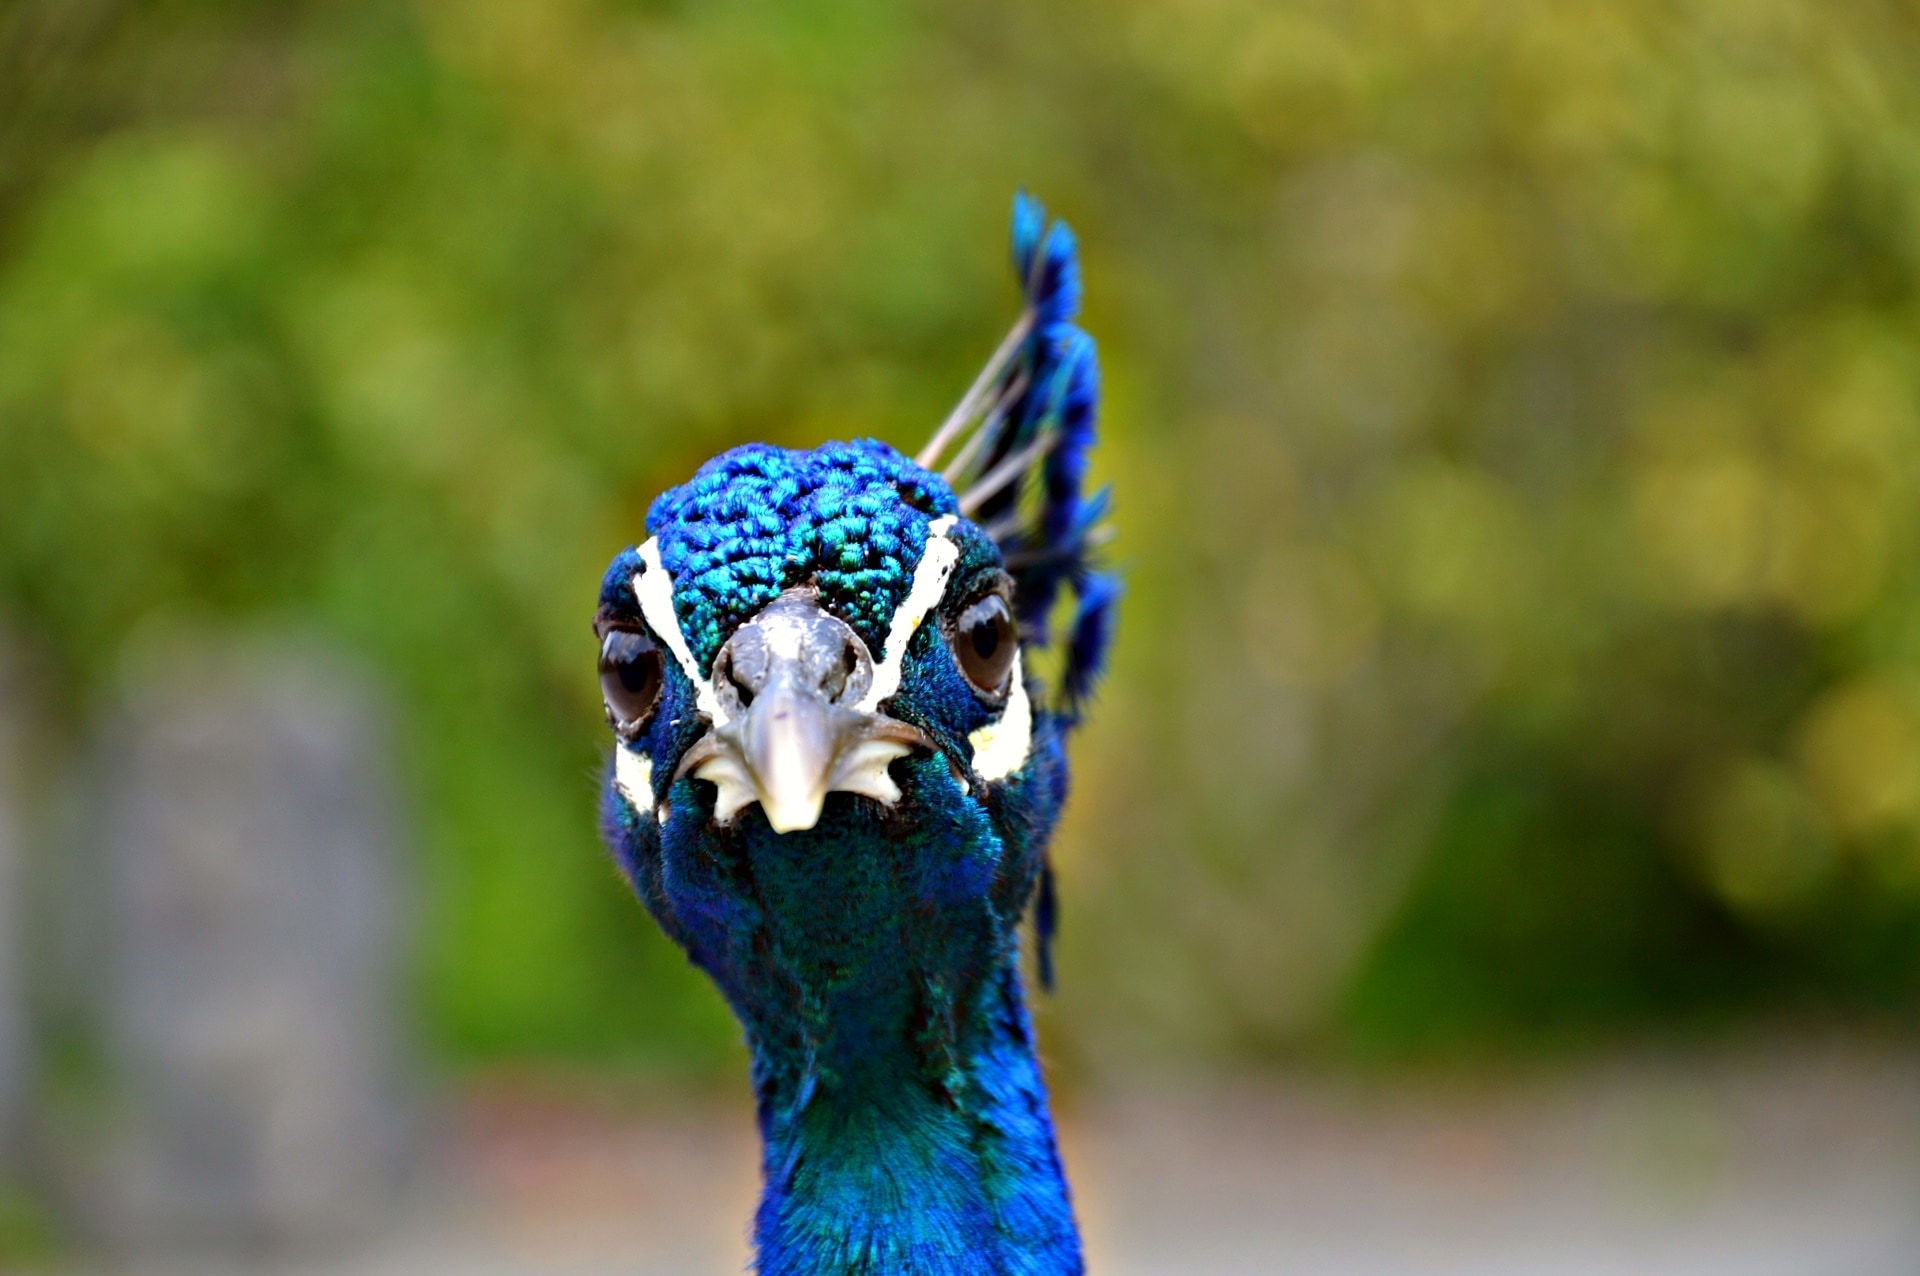 Peacock, Head, Beak, Bird, Blue, Plume, one animal, animal themes